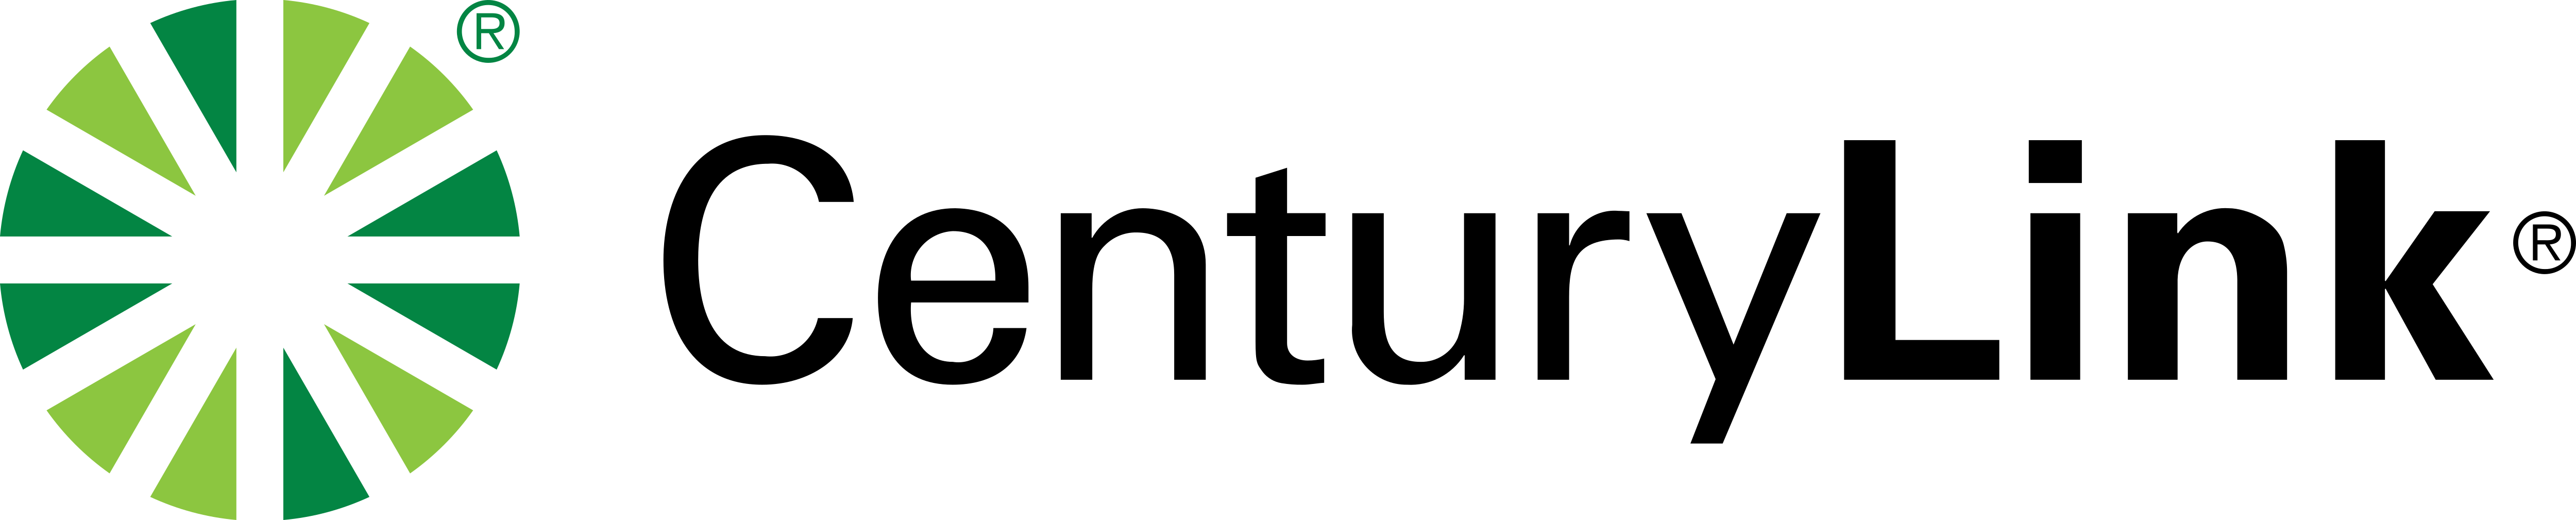 CENTURYLINK logo PNG descarga gratuita